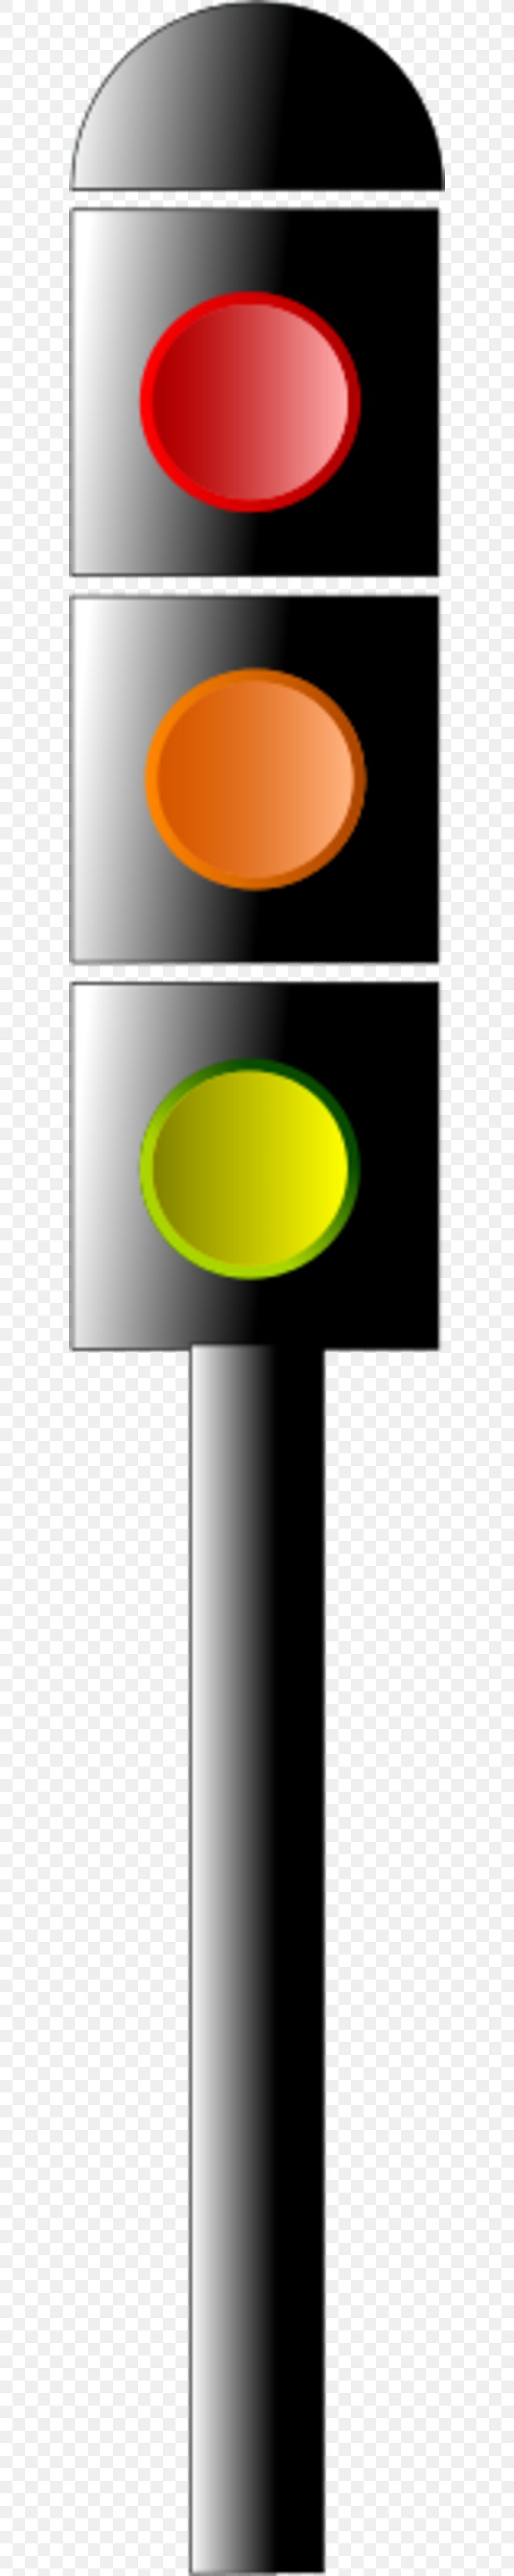 Traffic Light Railway Signal Railway Semaphore Signal Clip Art, PNG, 600x4112px, Traffic Light, Cylinder, Electric Light, Hand Signals, Railway Semaphore Signal Download Free